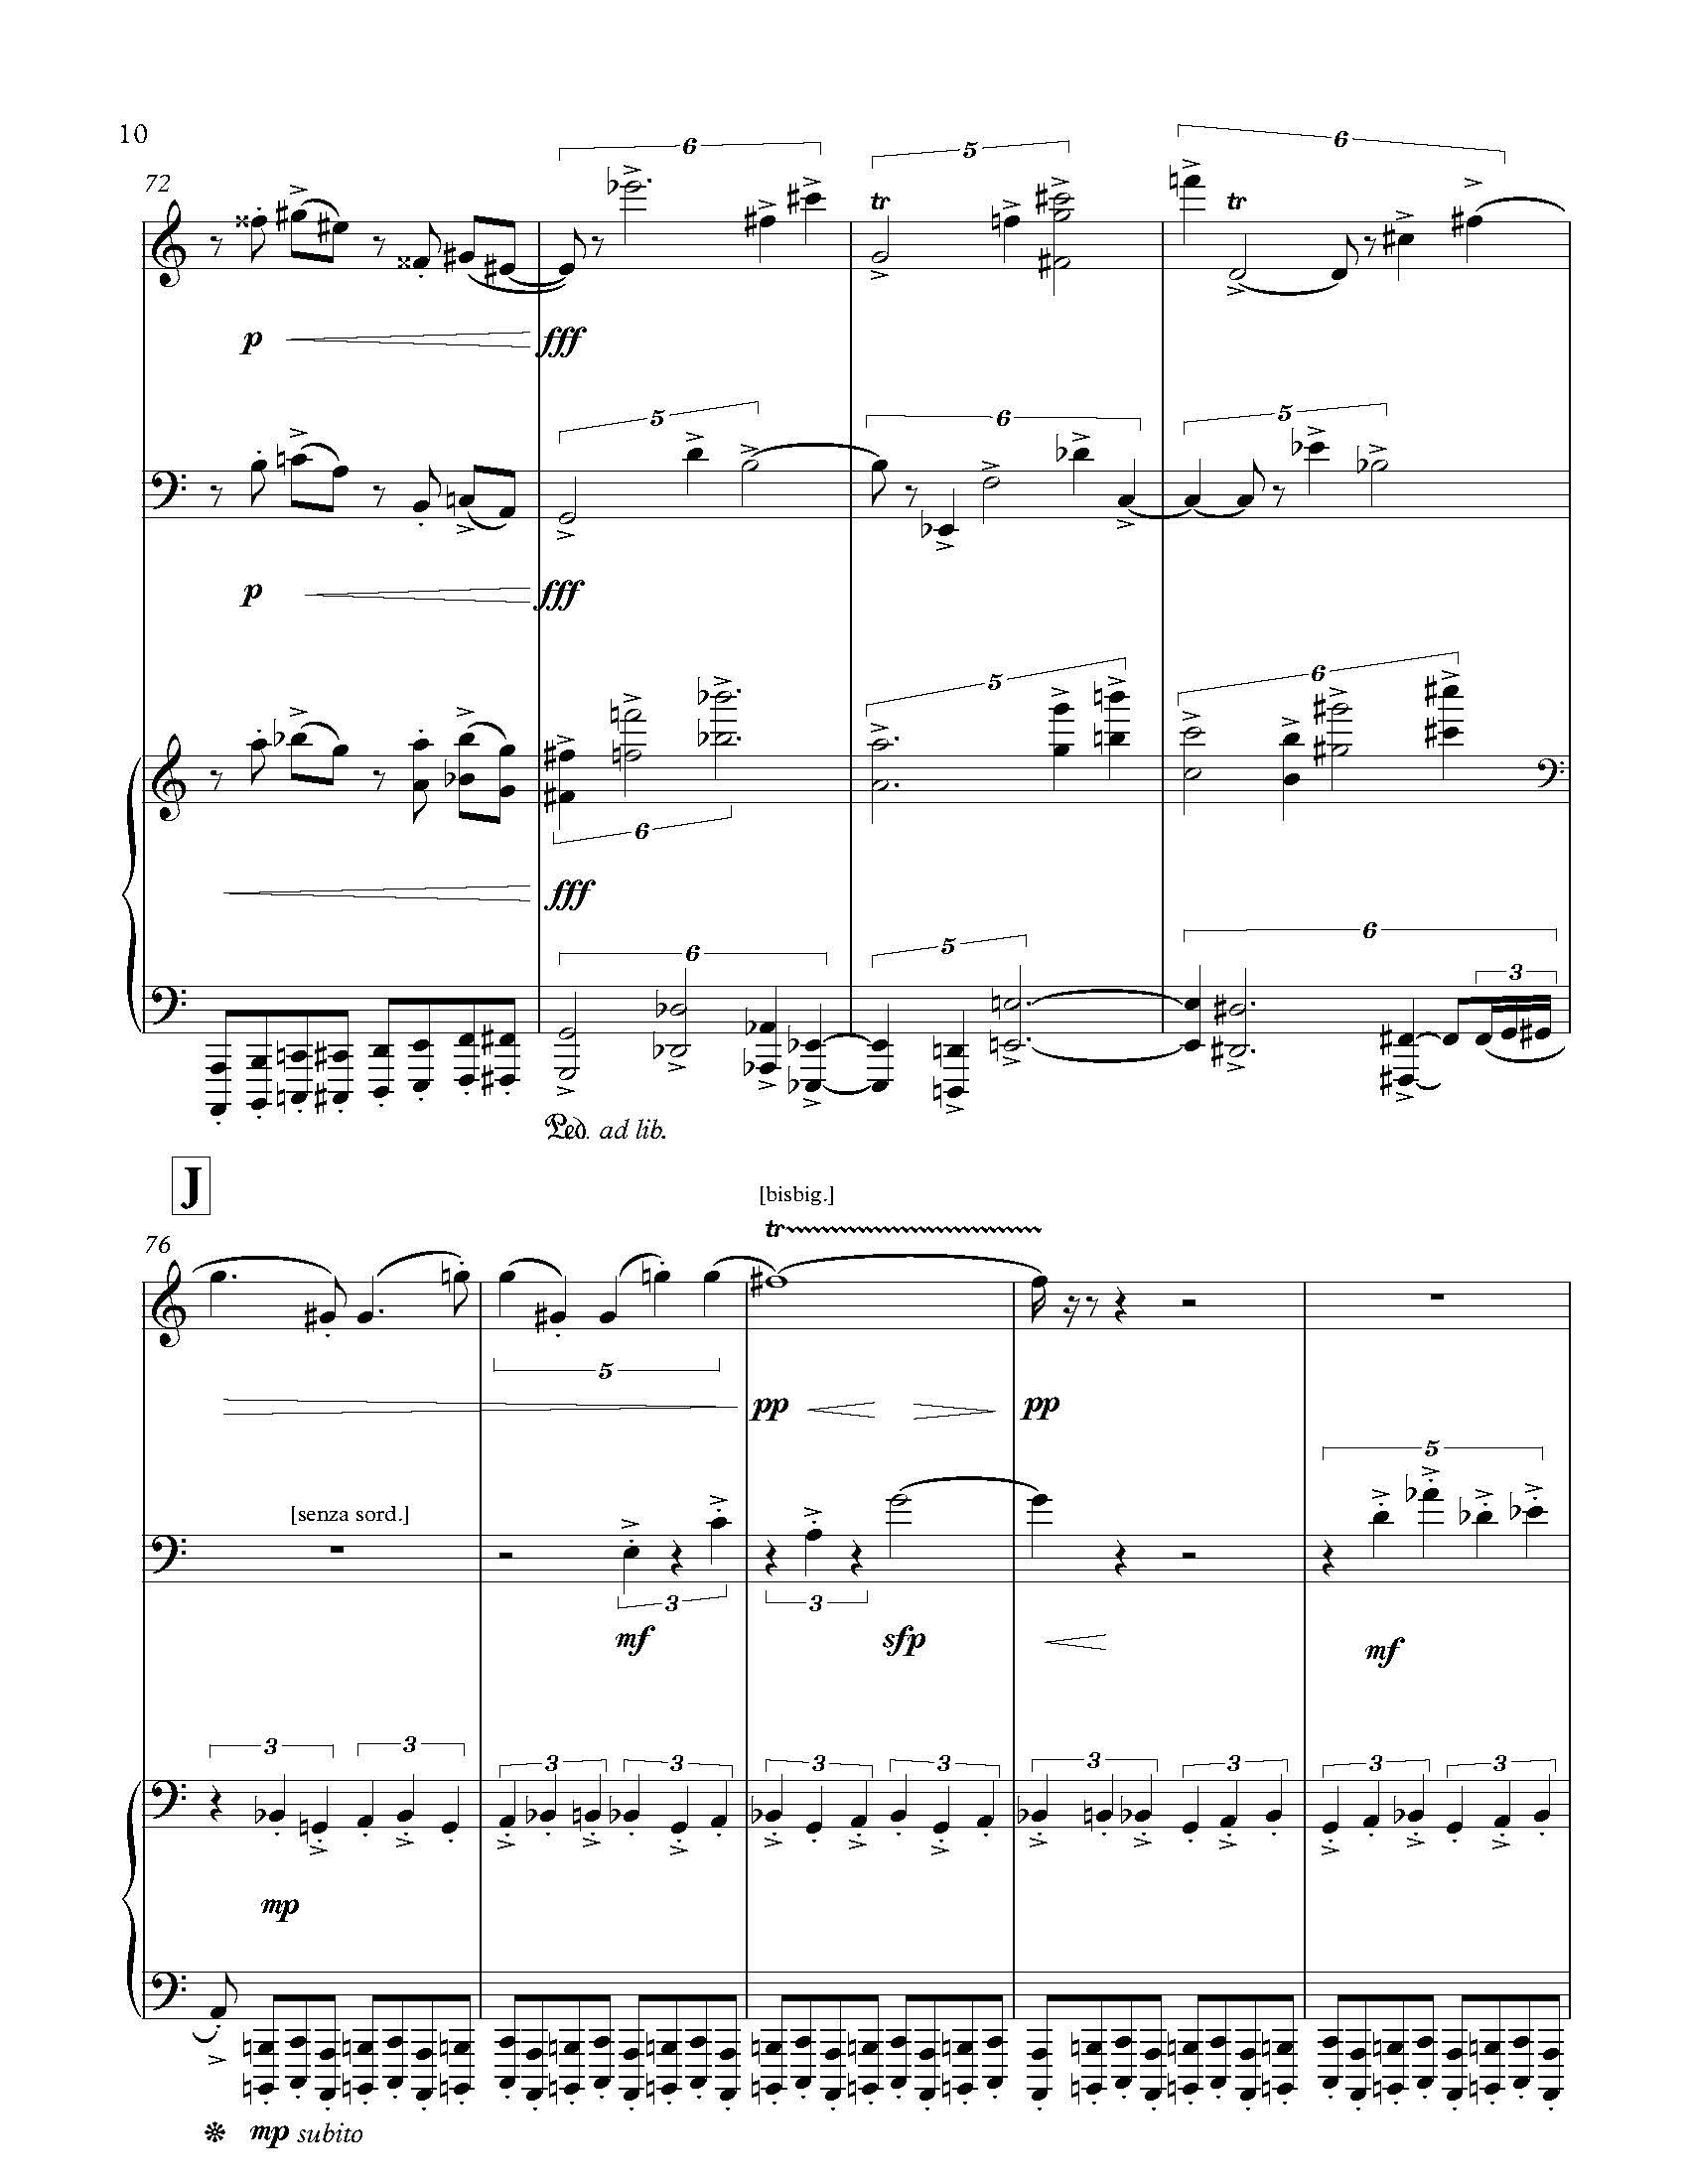 alice + zoltan 4ever - Complete Score_Page_16.jpg